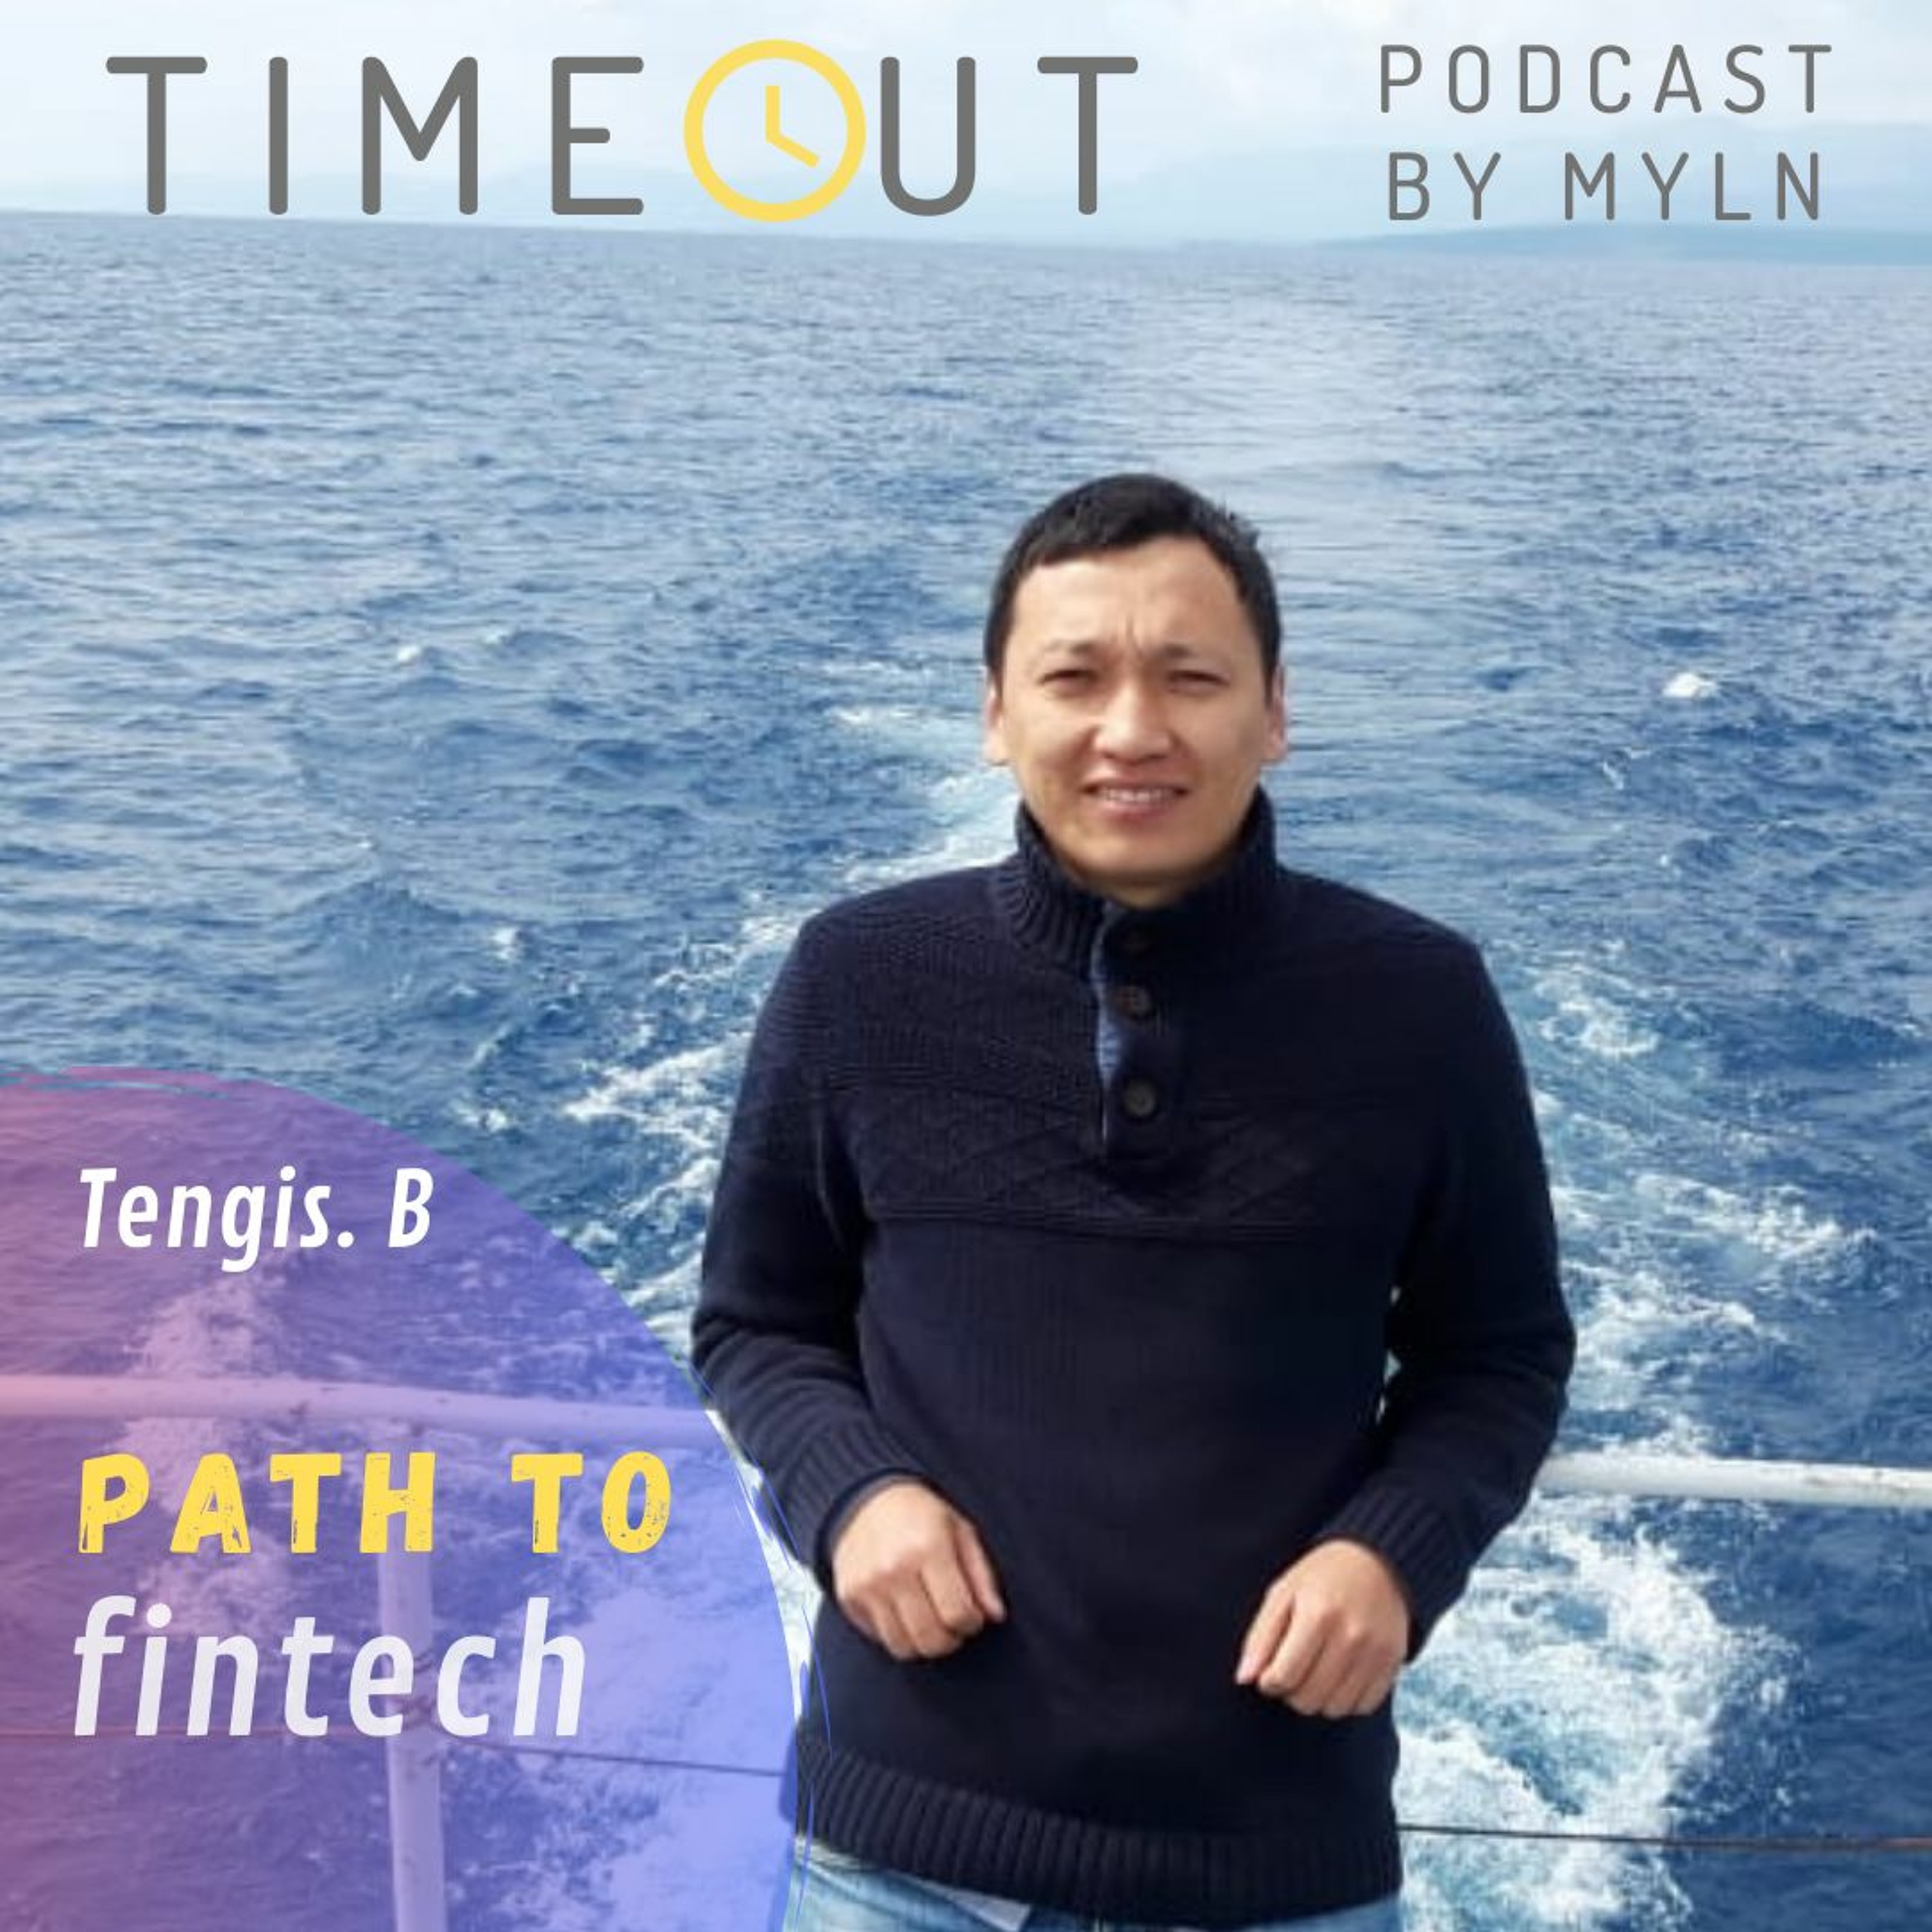 Episode 17 - Fintech with Tengis